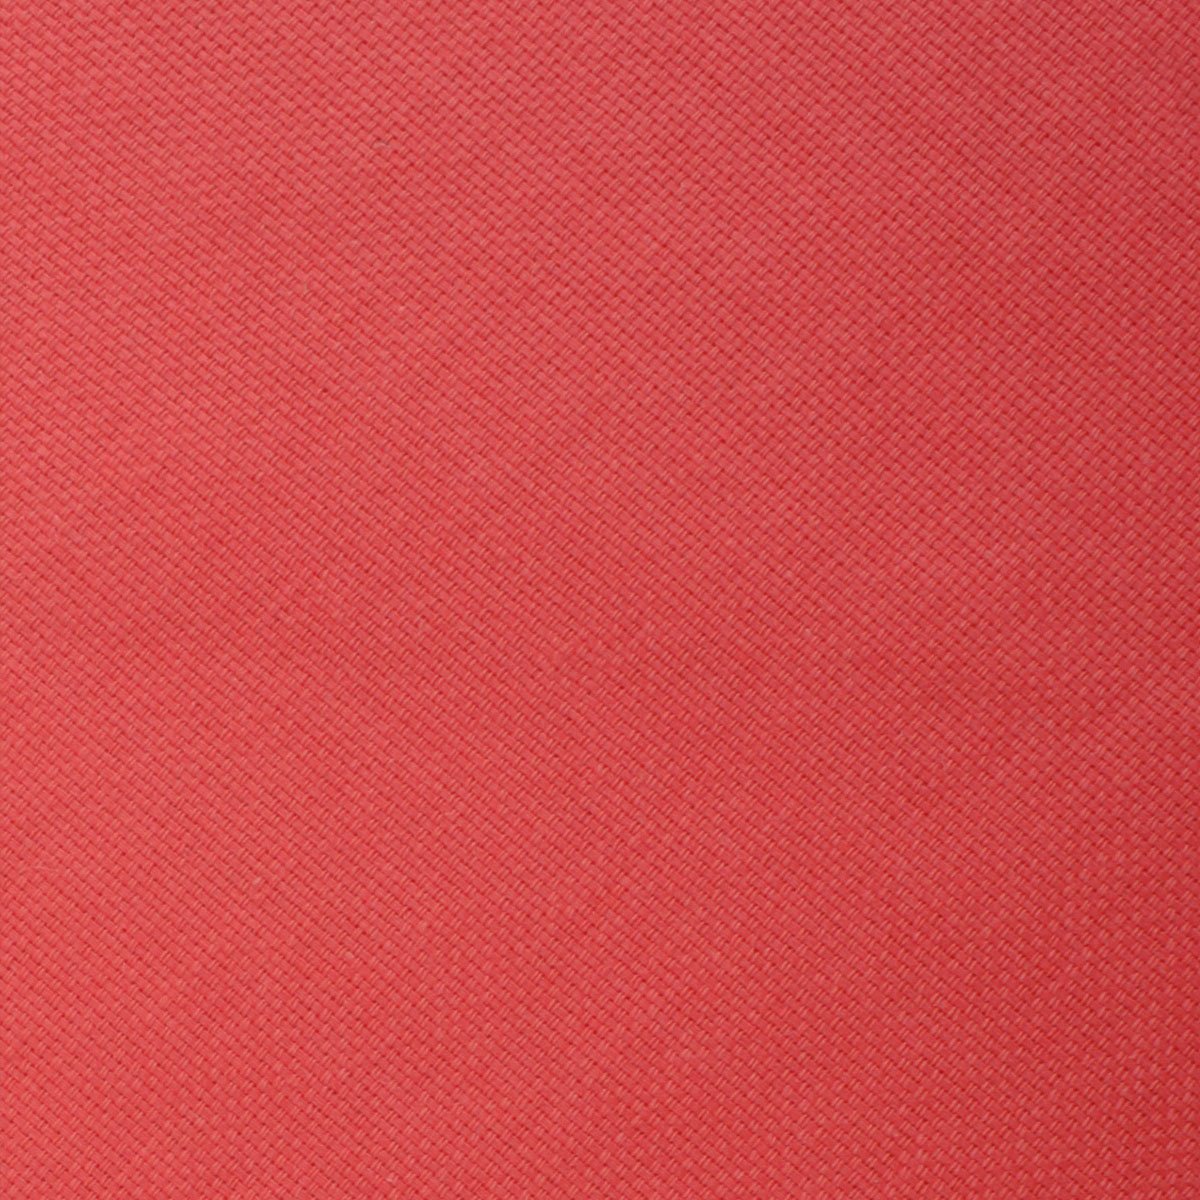 Guava Coral Linen Skinny Tie Fabric